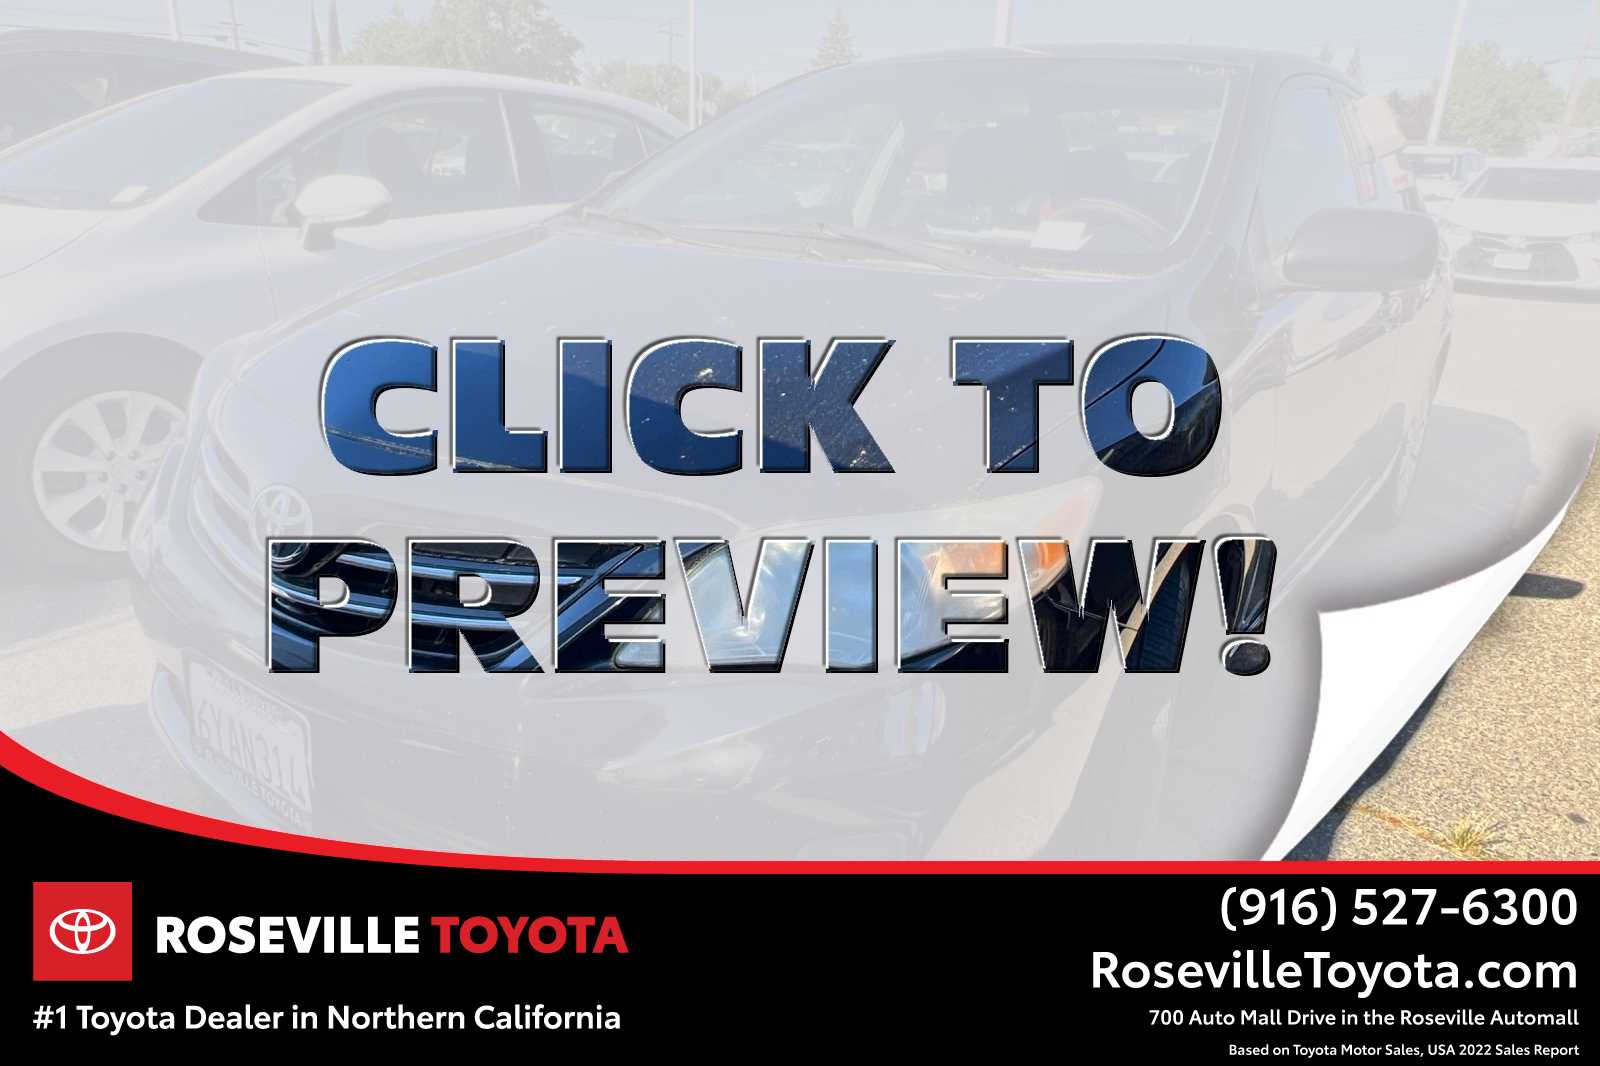 2013 Toyota Corolla LE -
                Roseville, CA